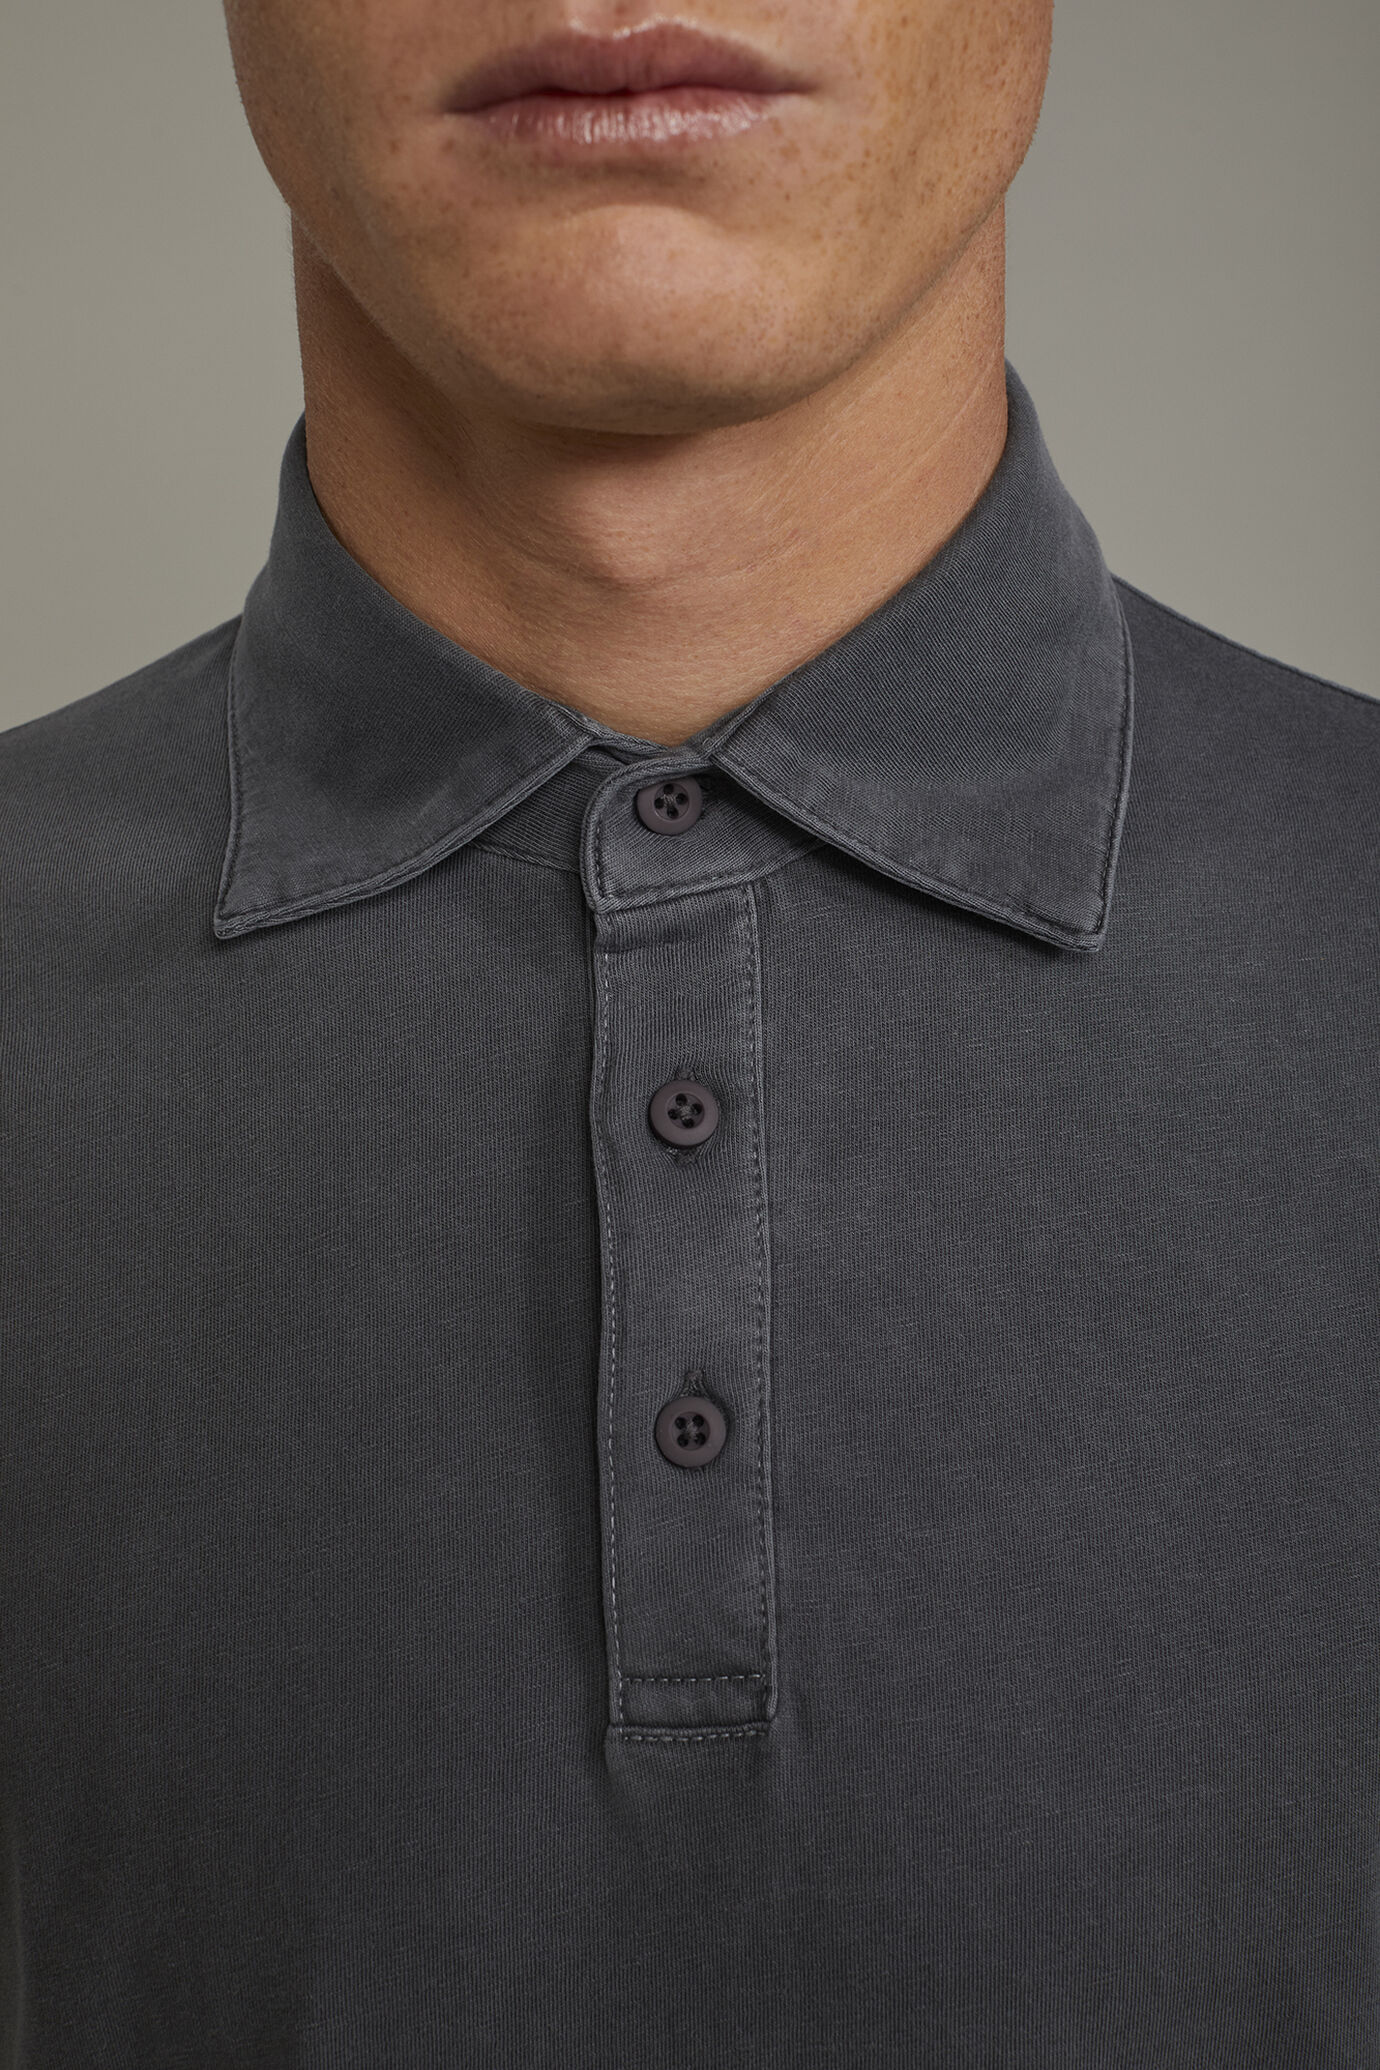 Men’s short sleeve polo shirt 100% cotton regular fit image number 3